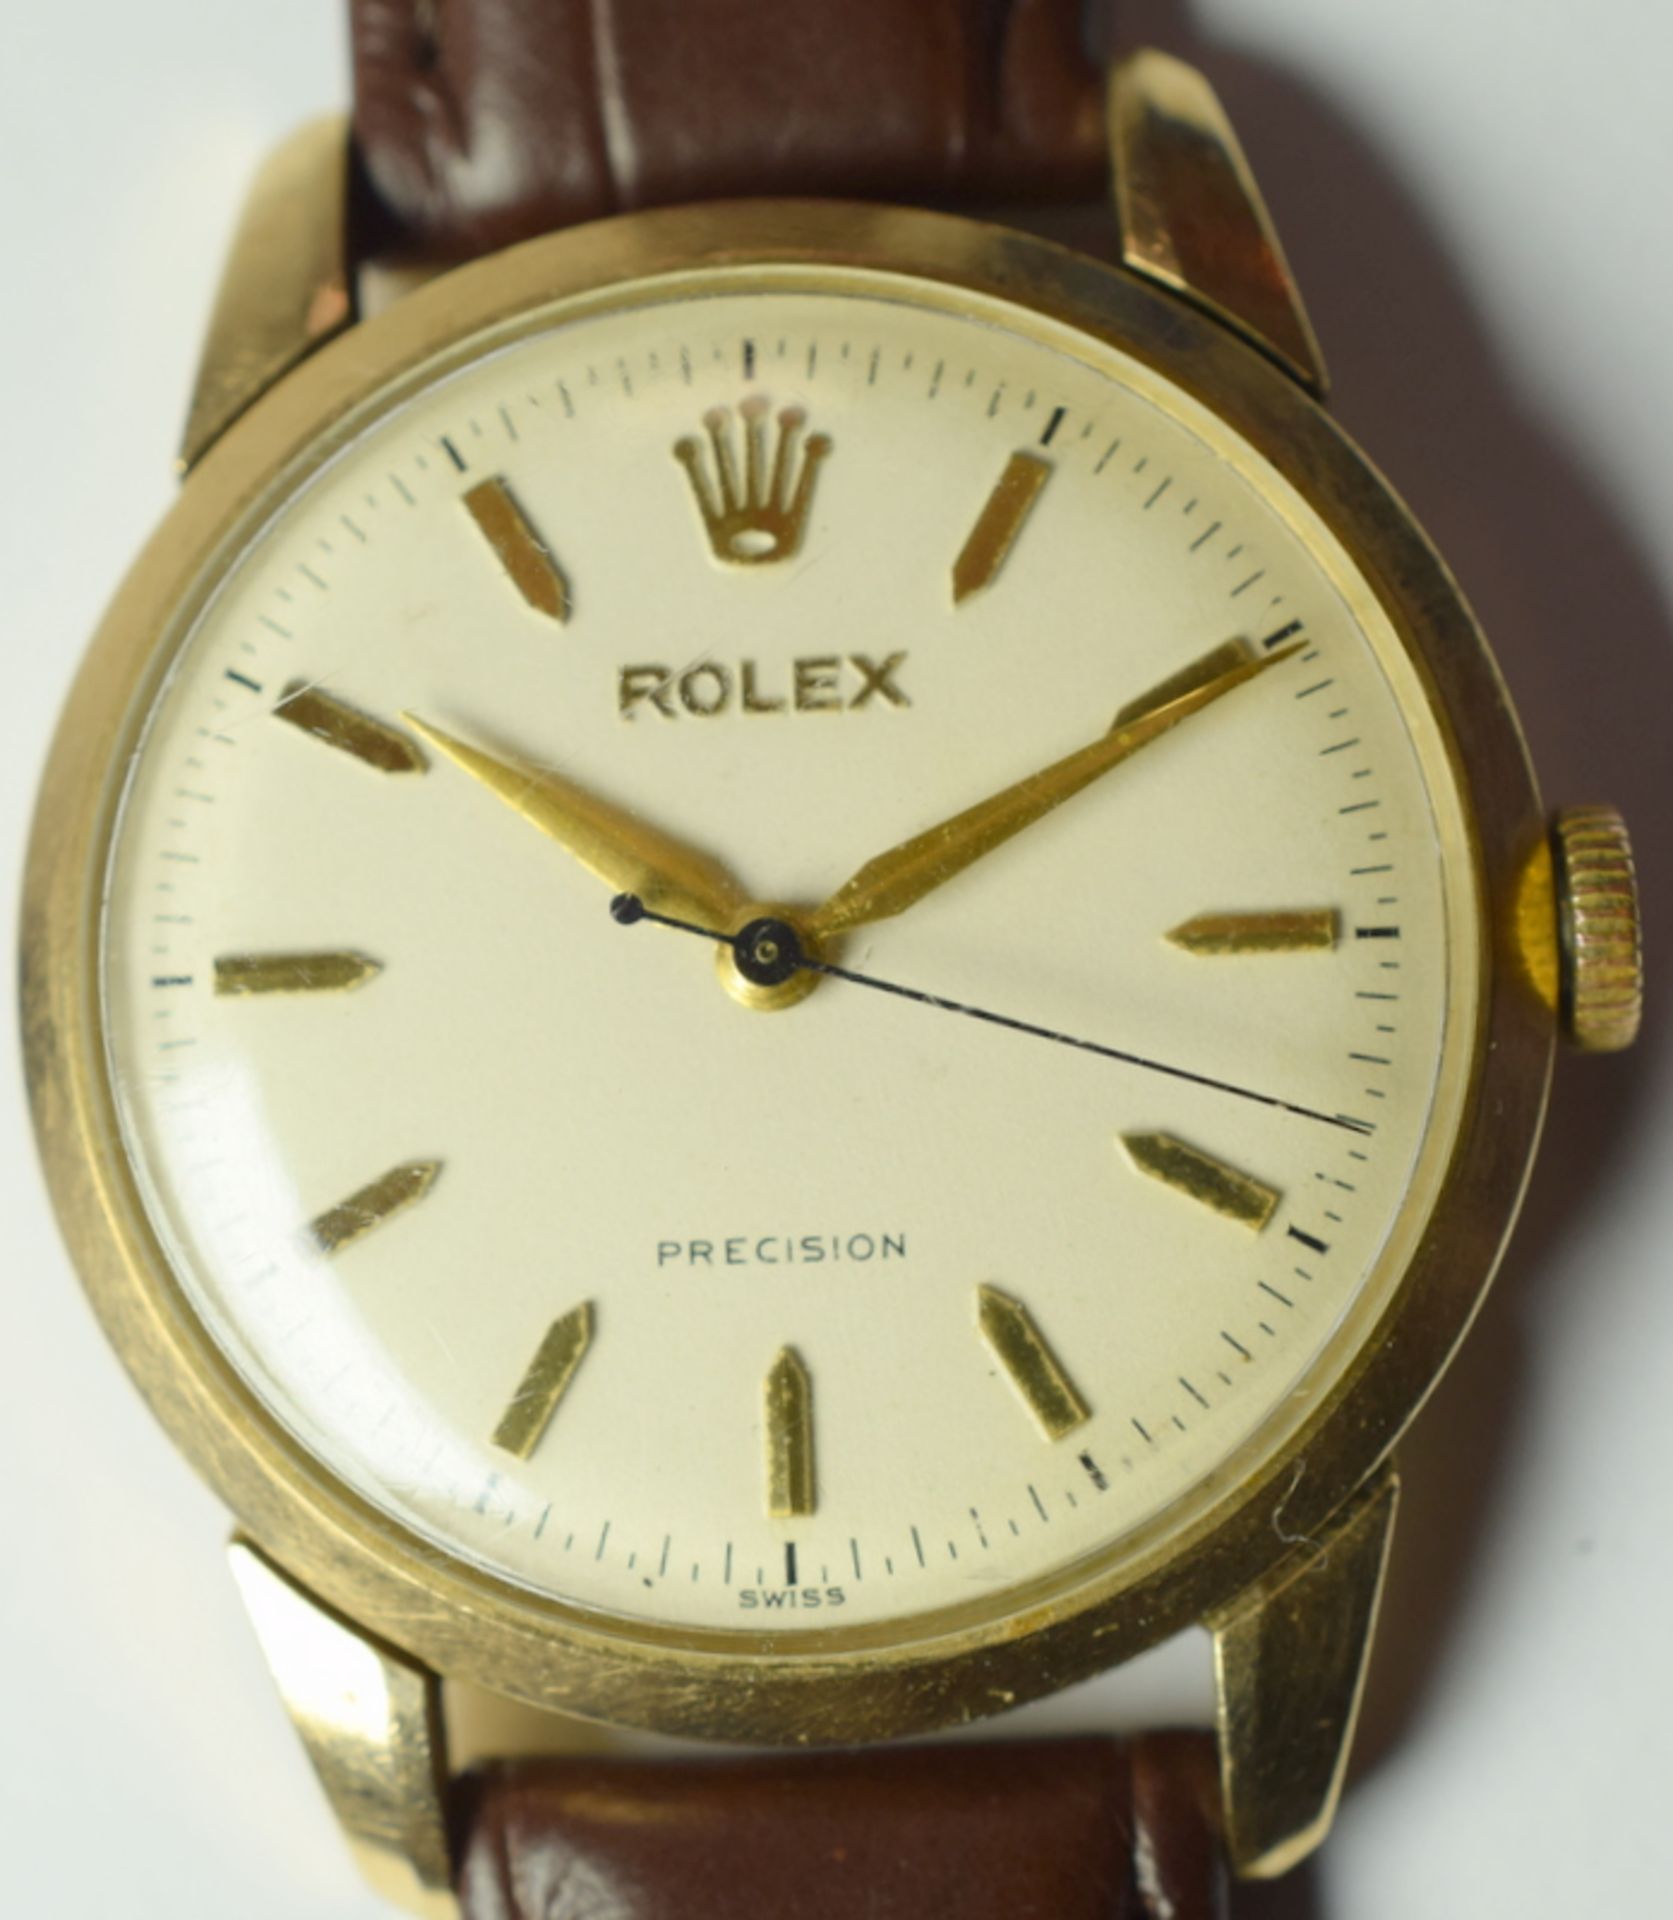 Rolex Precision 9ct Gold Gentleman's Wristwatch - Image 2 of 5